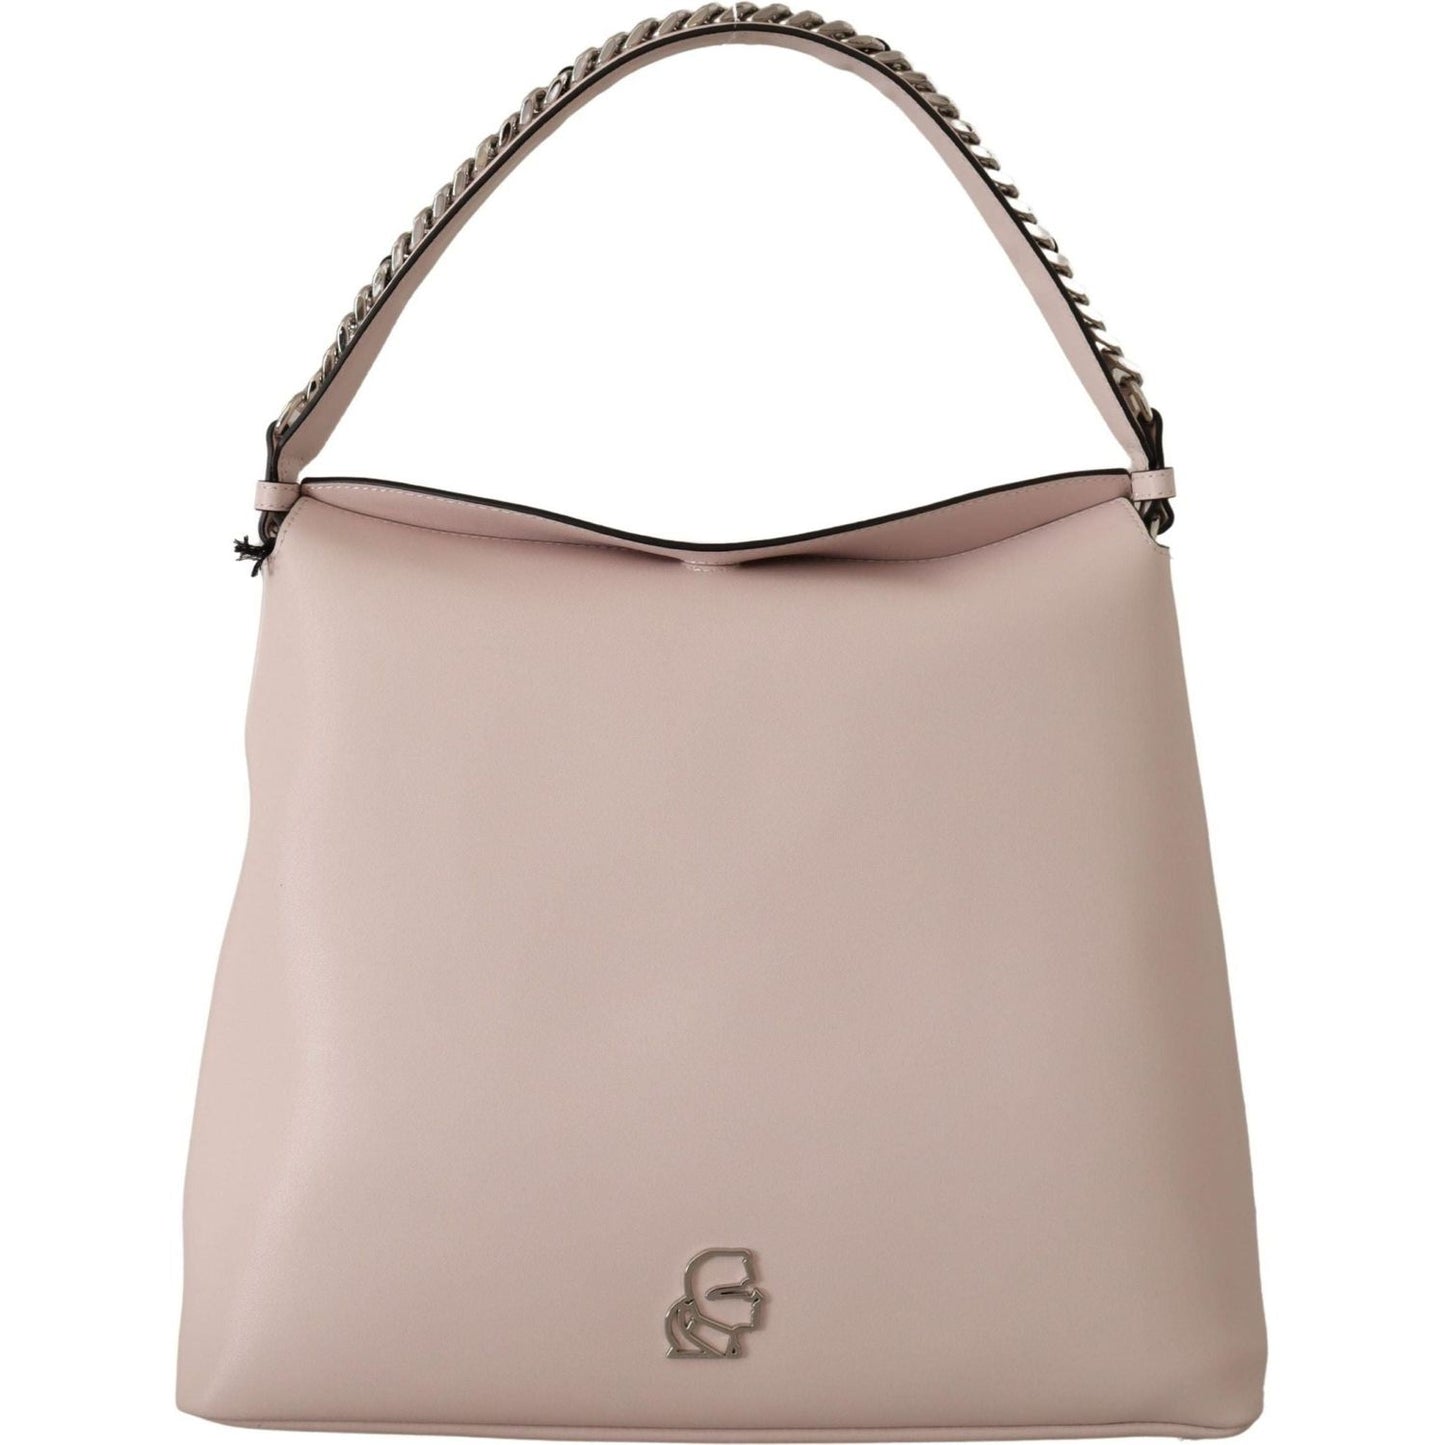 Karl Lagerfeld Elegant Mauve Chalk Leather Shoulder Bag light-pink-mauve-leather-shoulder-bag IMG_7434-scaled-87e78277-0ba.jpg